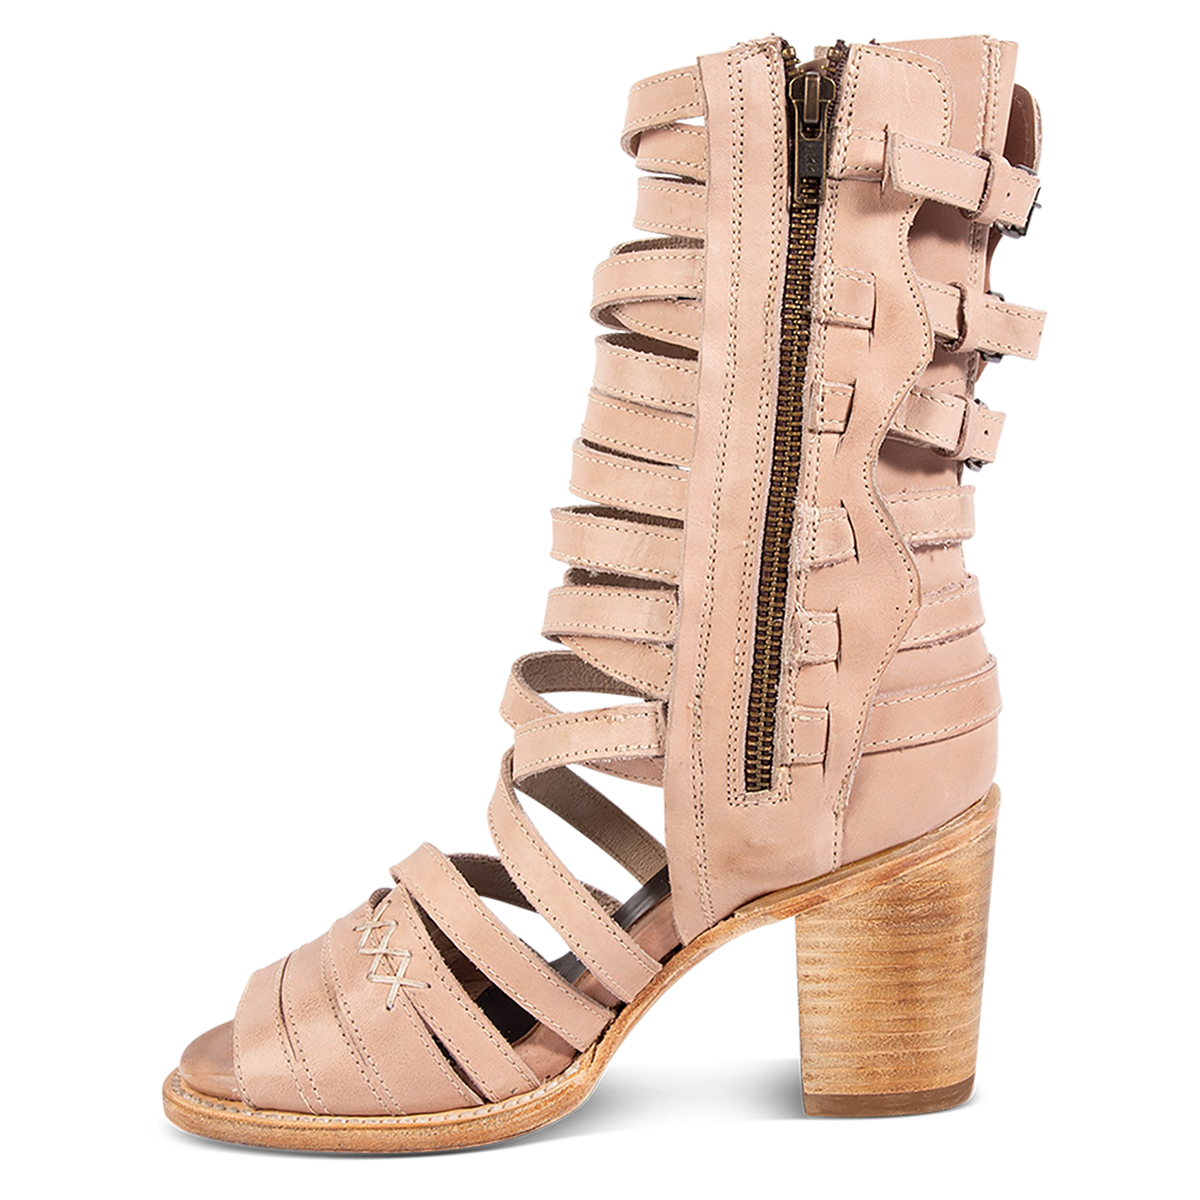 Inside view showing a working brass zipper, block heel and leather straps on FREEBIRD women's Makayla blush leather sandal